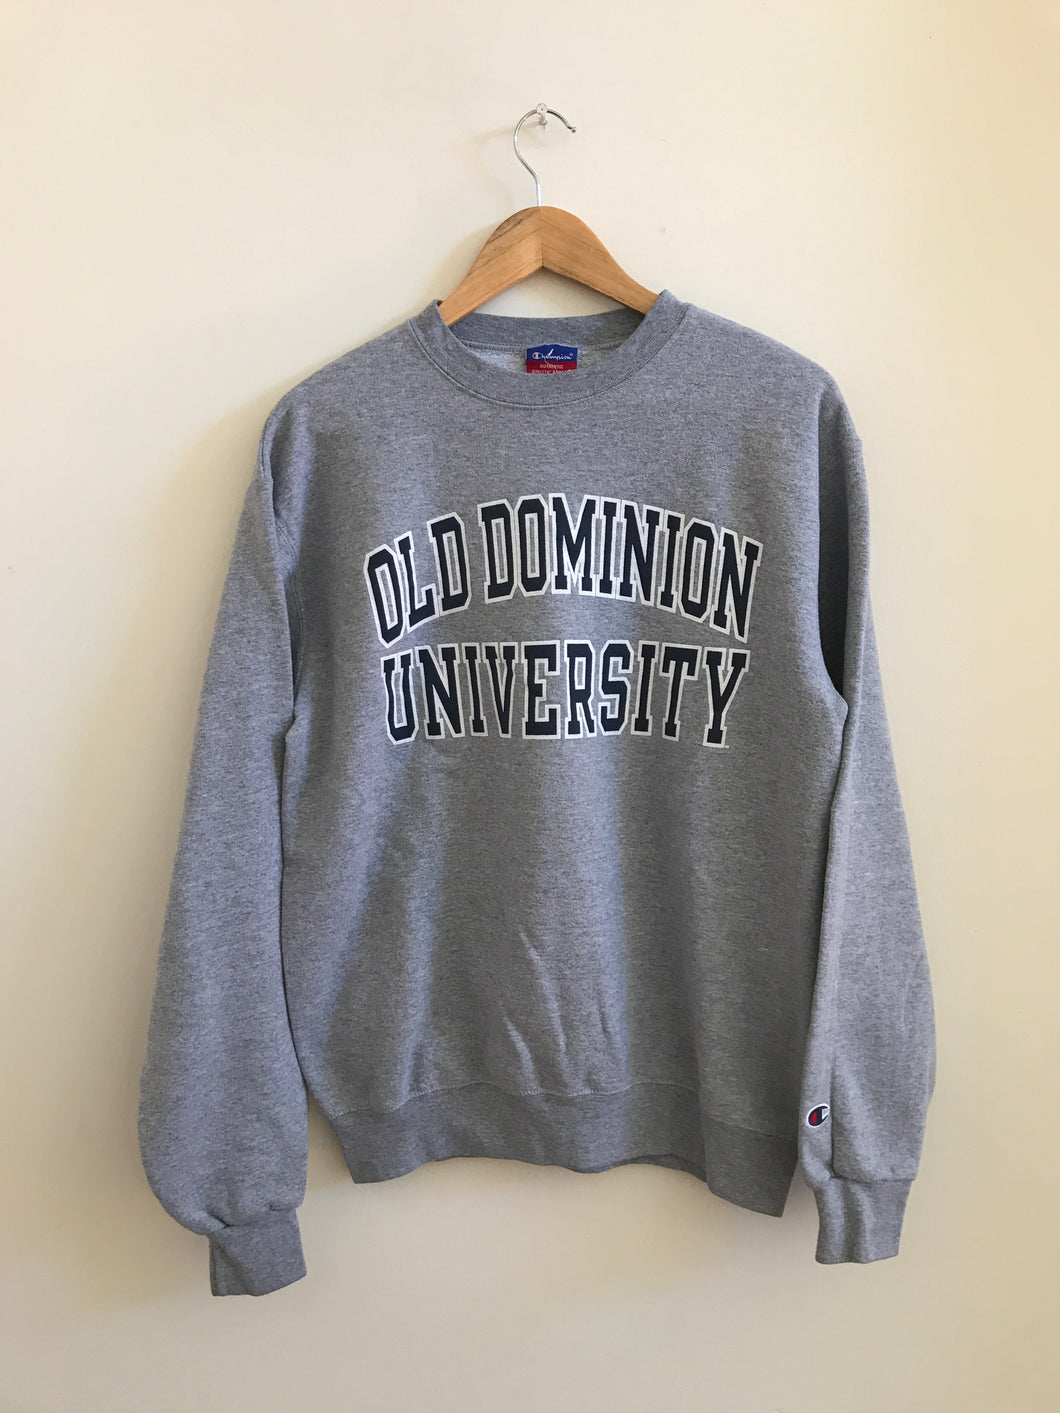 Old Dominion Champion Vintage Sweatshirt